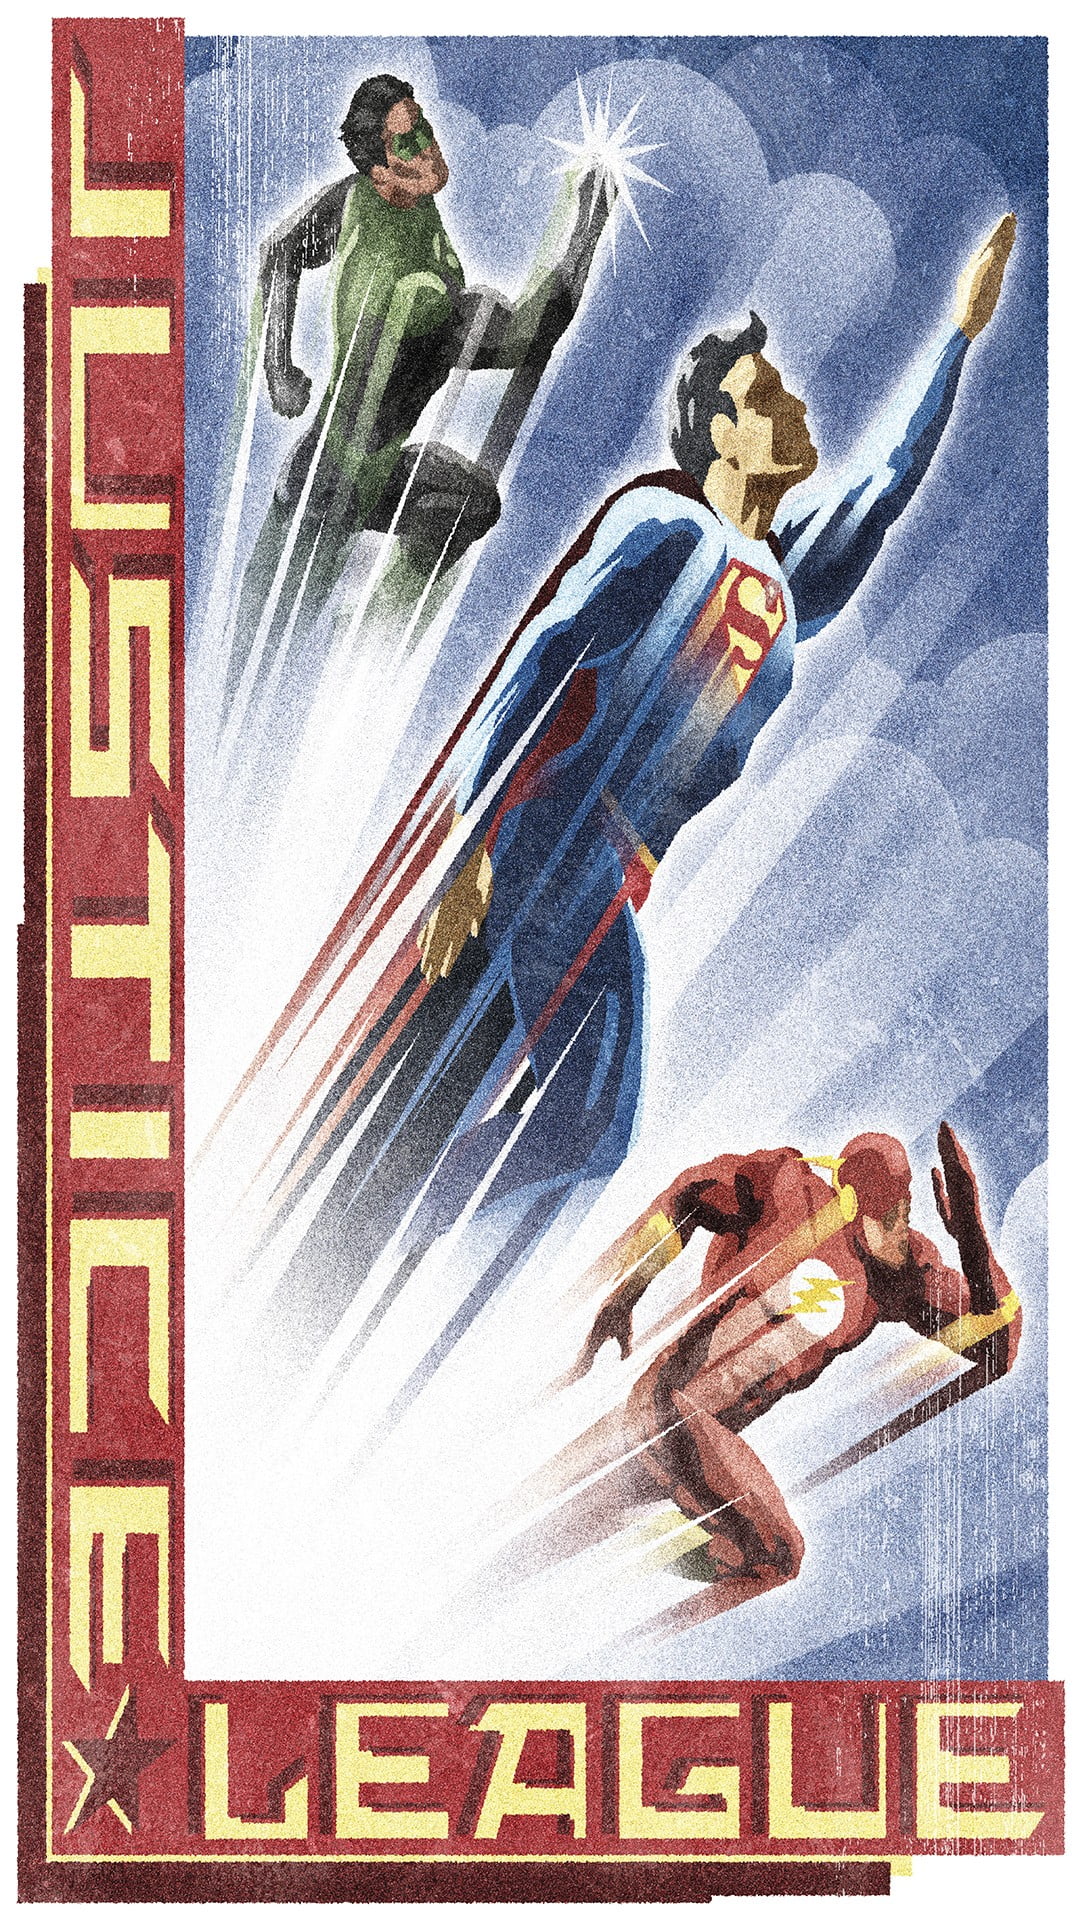 Justice League comic book, Justice League, men, Batman logo, Superman